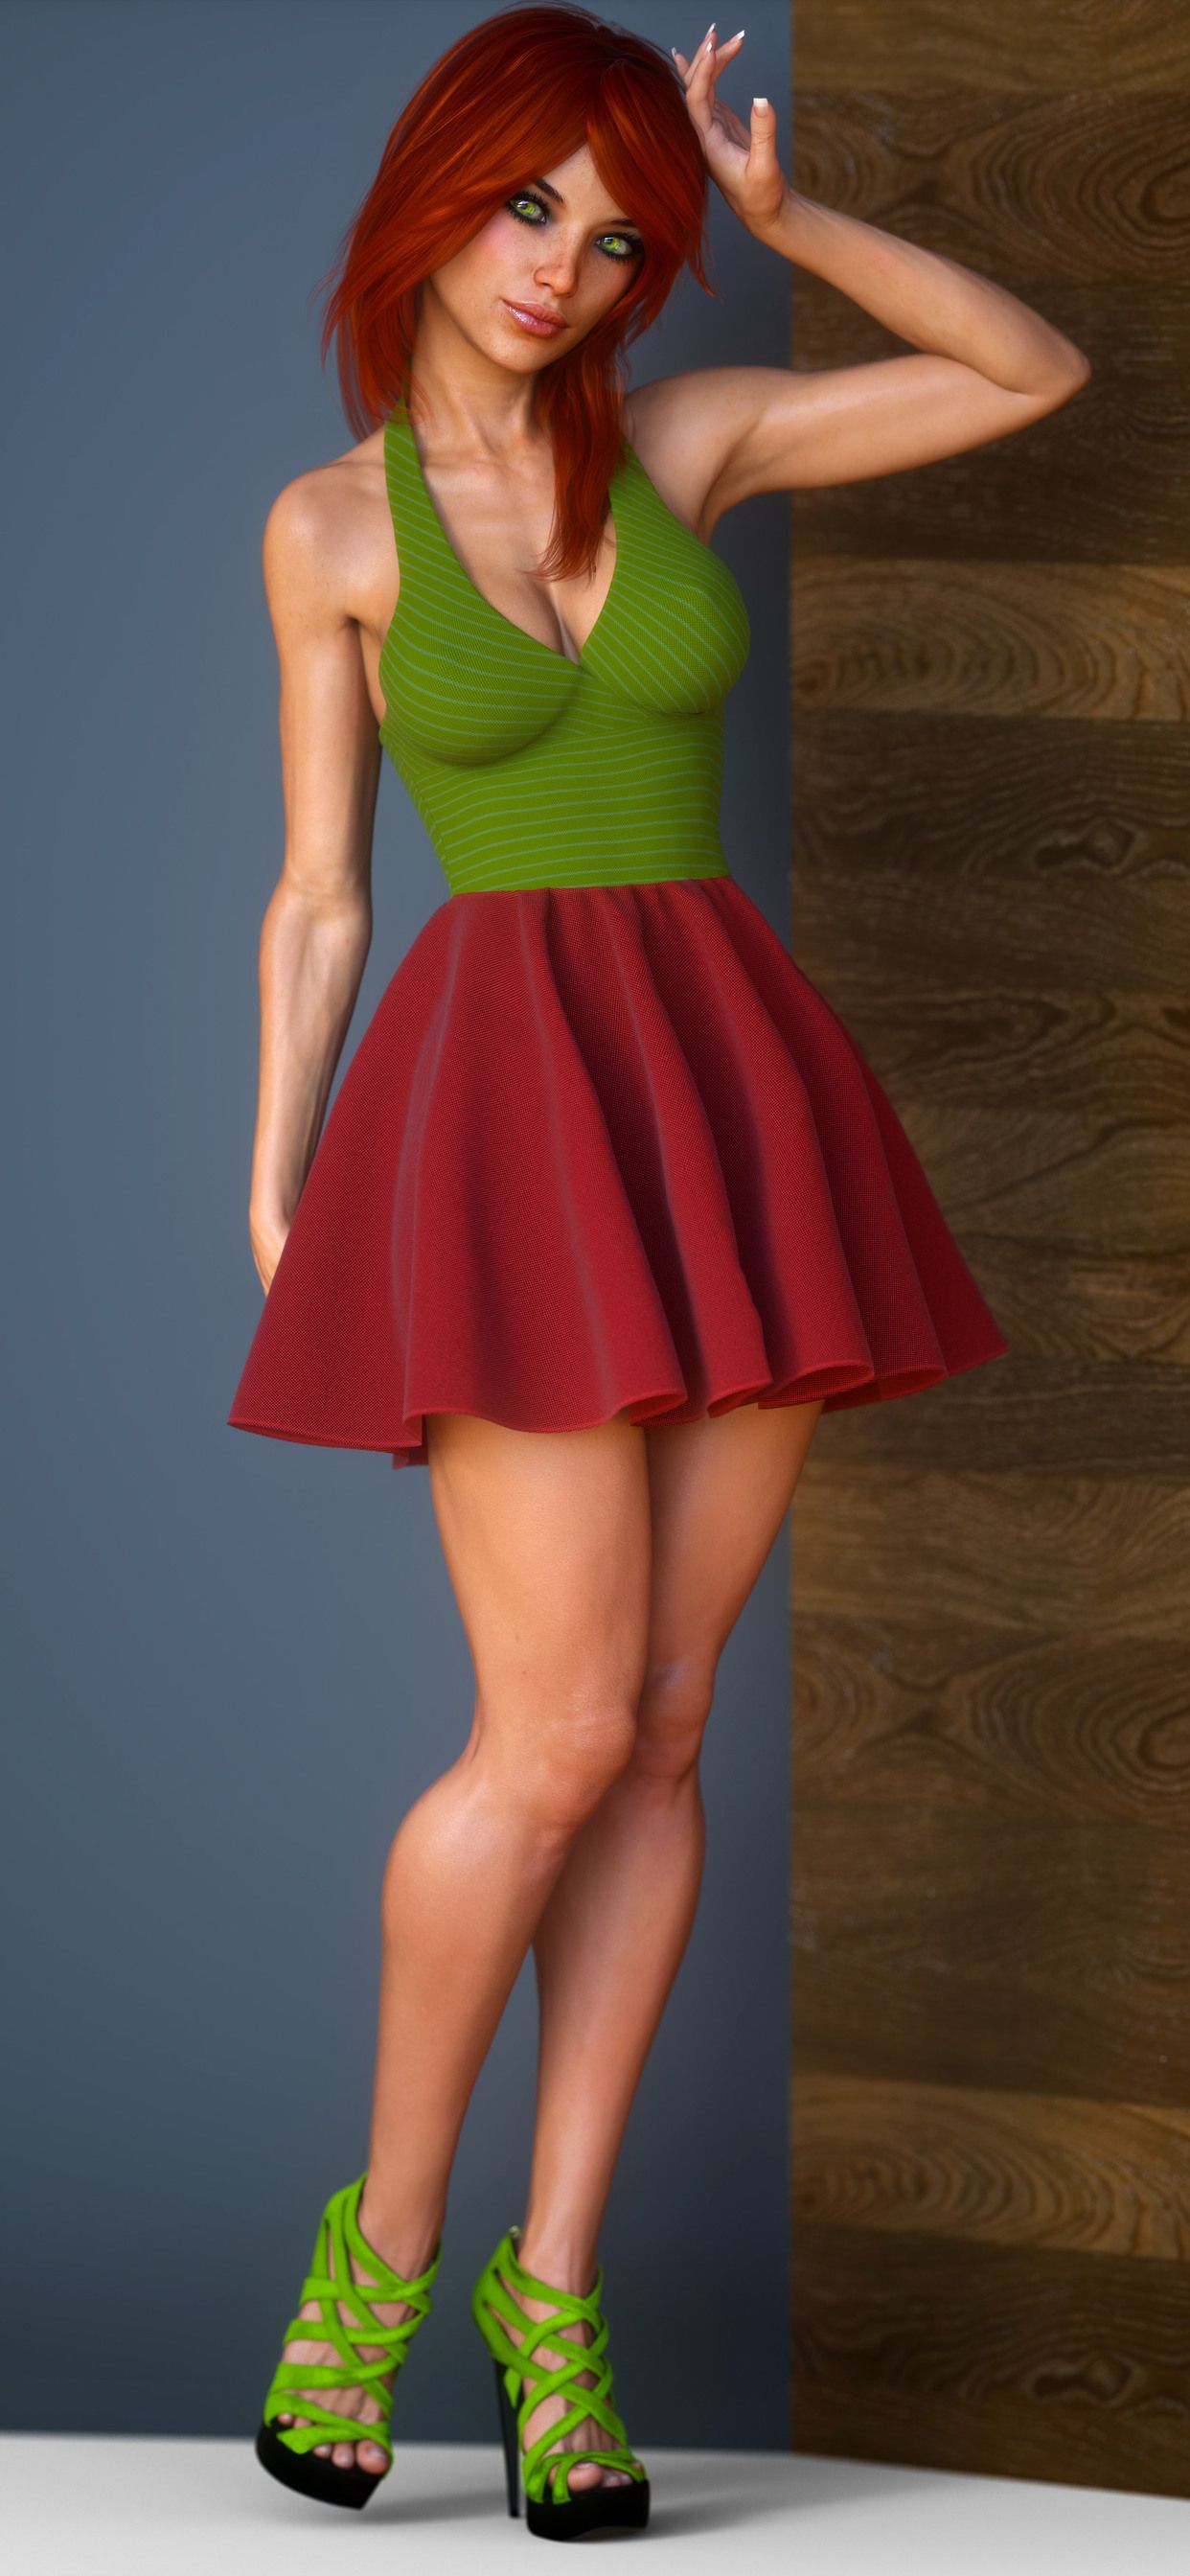 Hot Women 3D CGI iPhone XS MAX HD 4k Wallpaper, Image